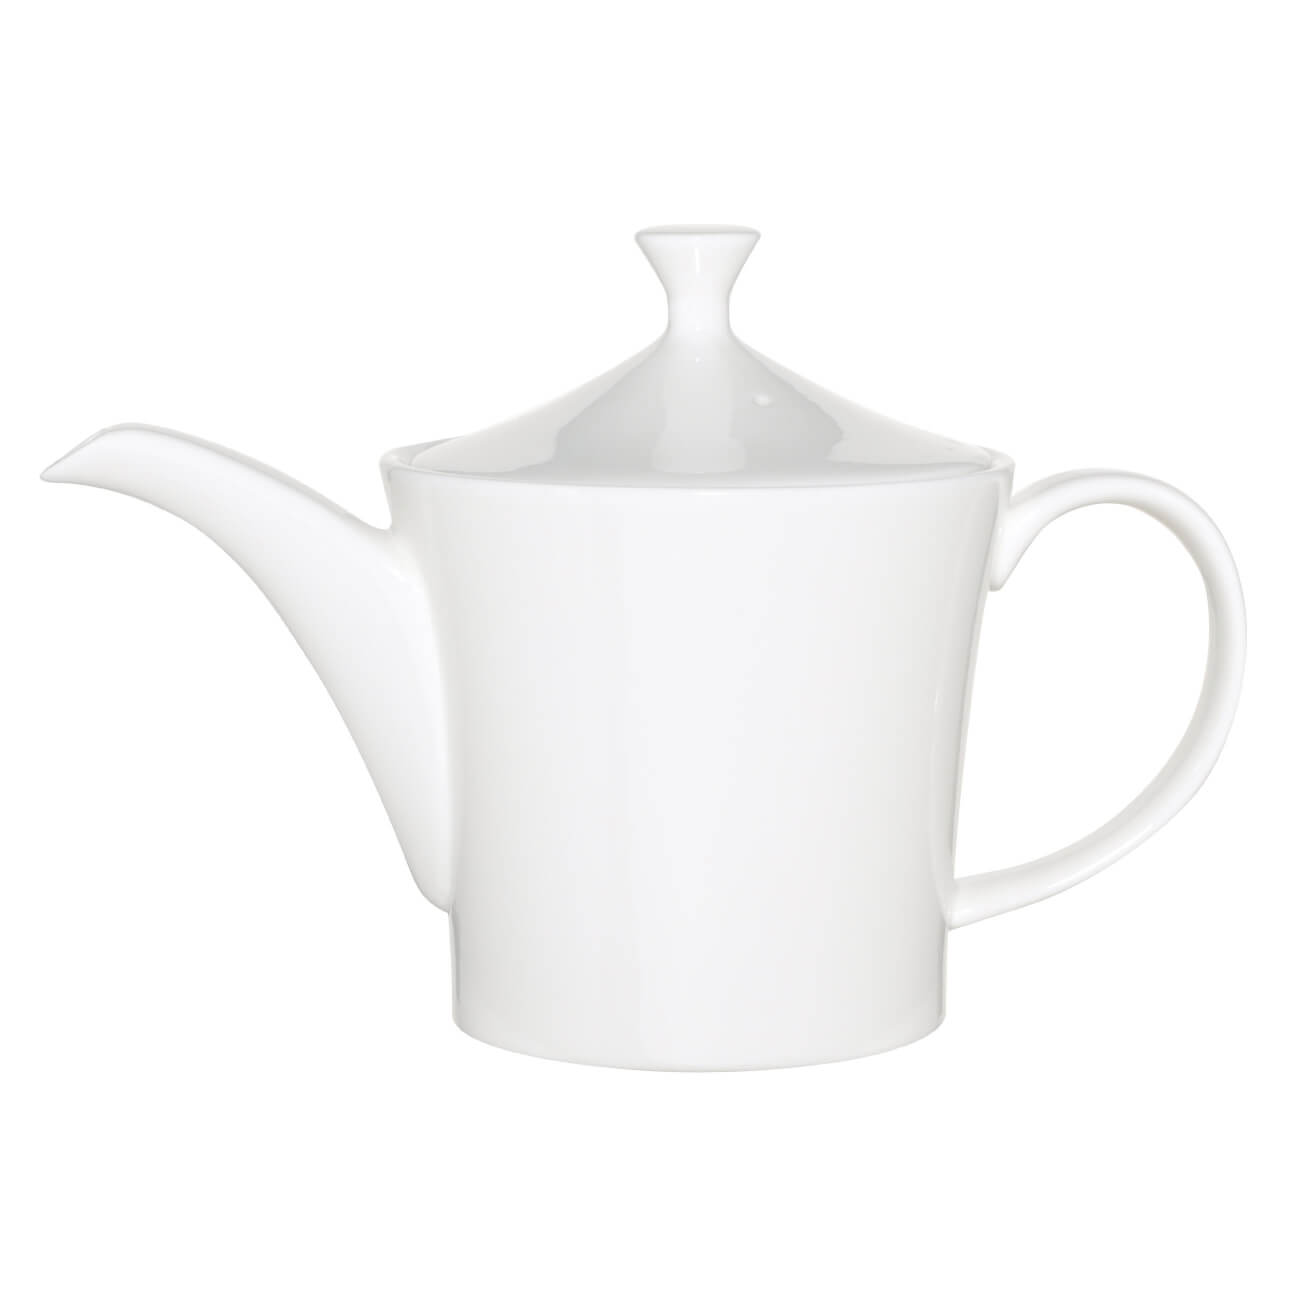 Чайник заварочный, 800 мл, фарфор F, белый, Ideal white чайник заварочный 800 мл фарфор f белый ideal white